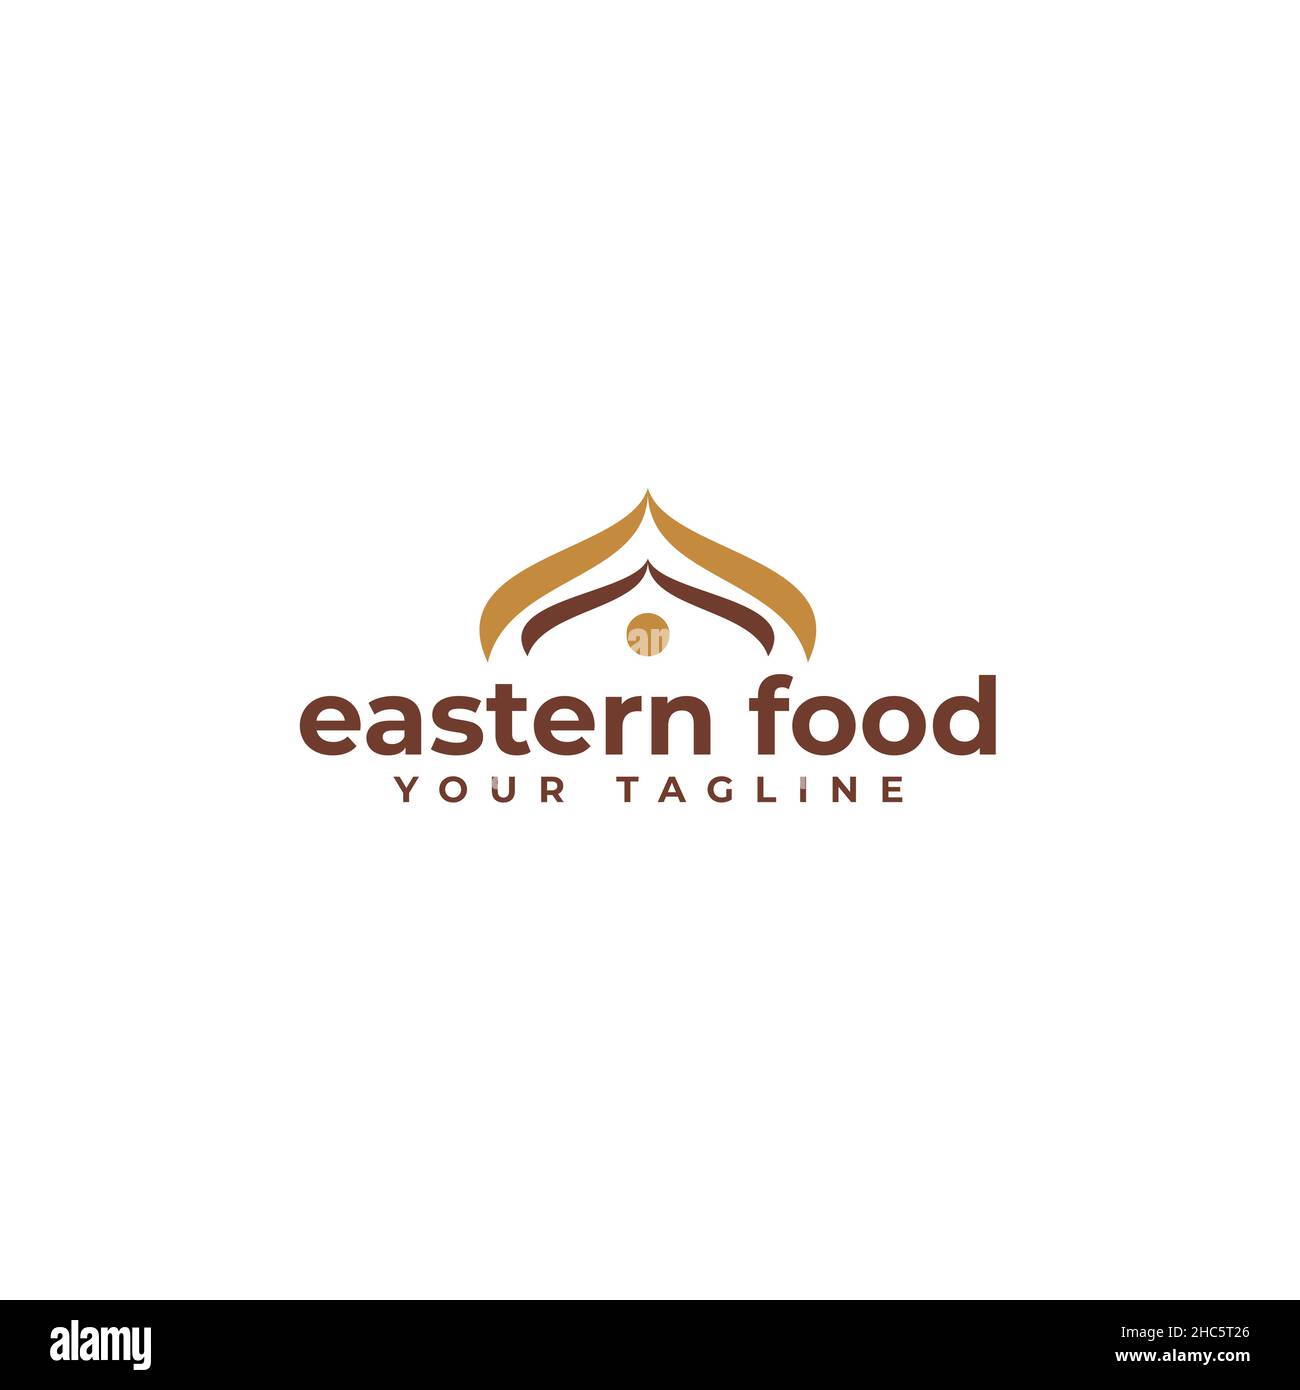 Design moderne et simple avec logo EASTERN FOOD Illustration de Vecteur